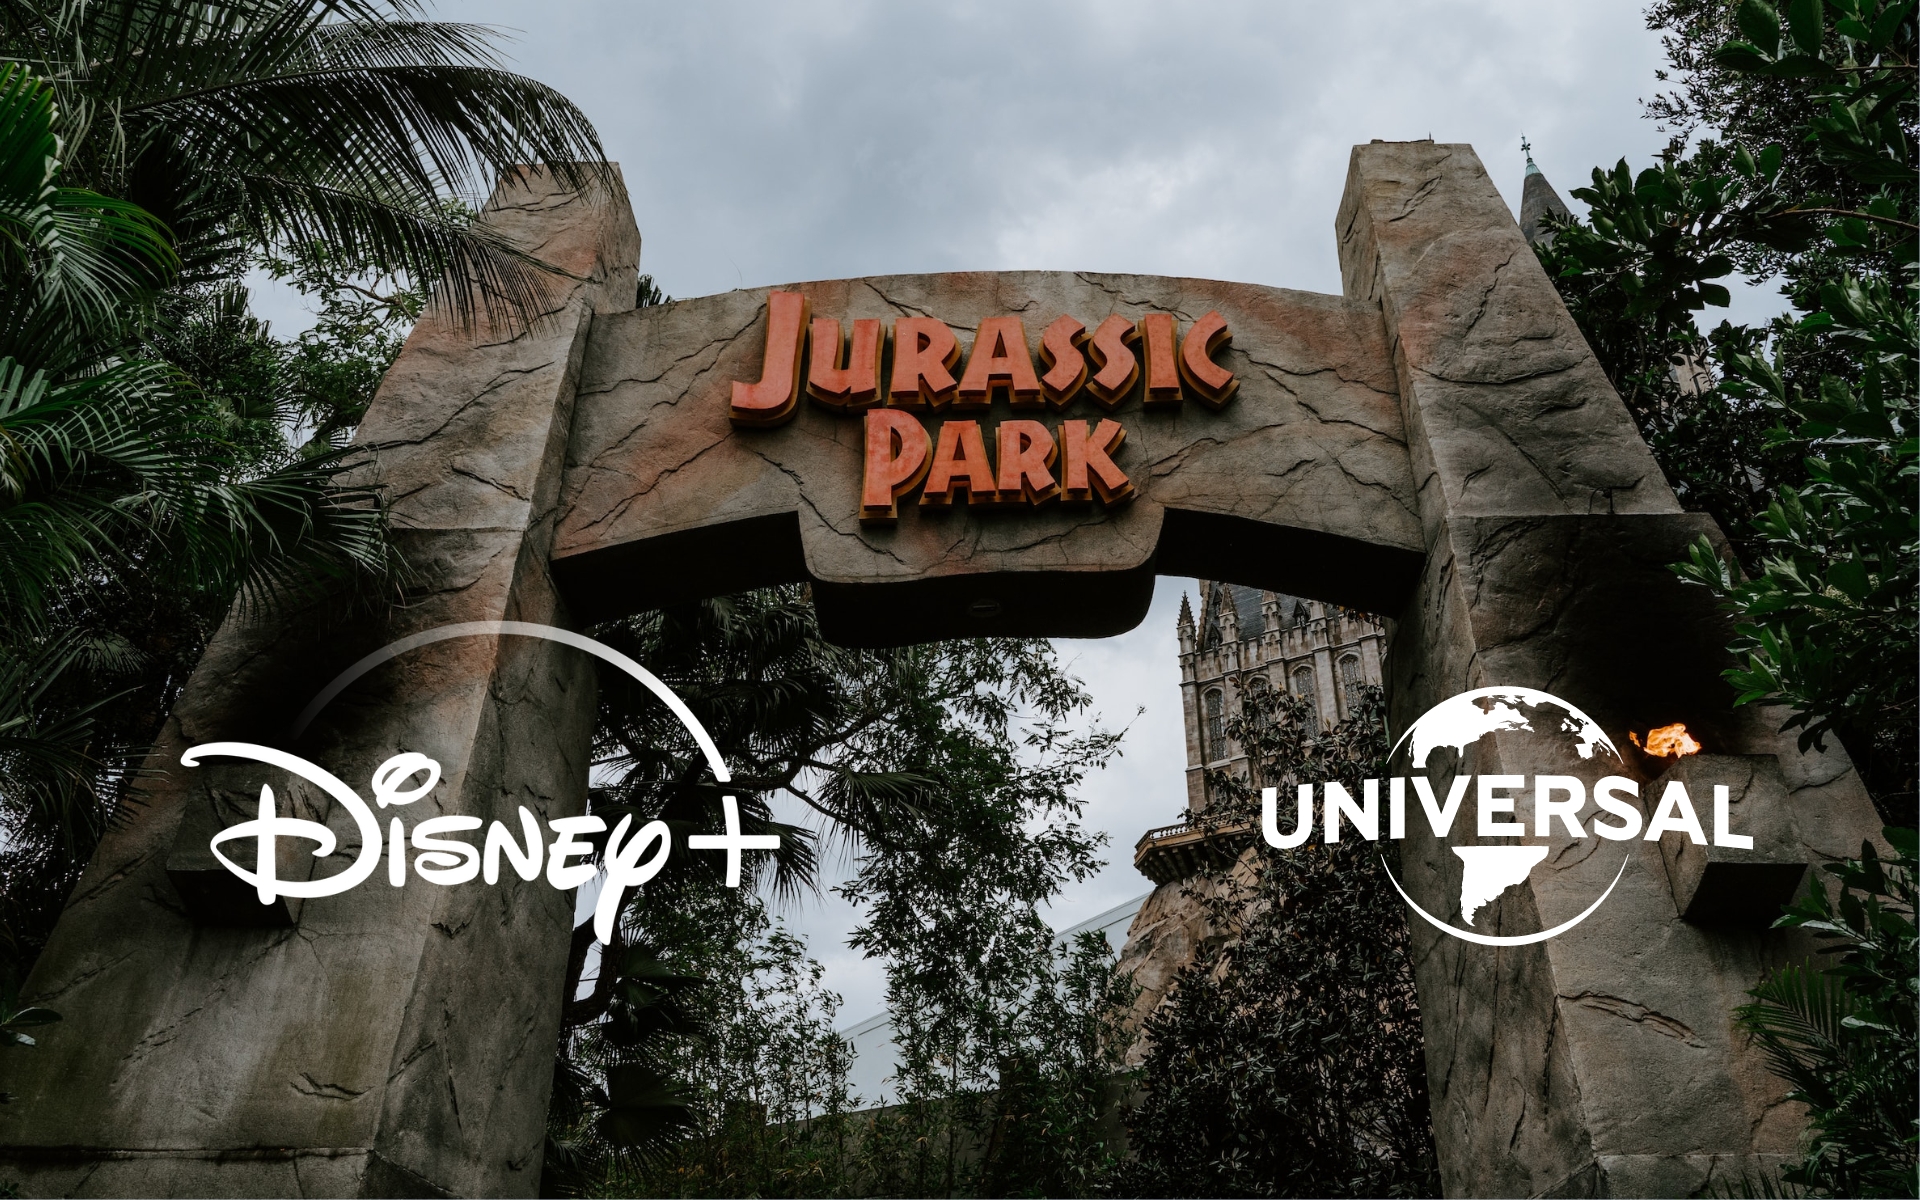 Is Jurassic Park Disney or Universal